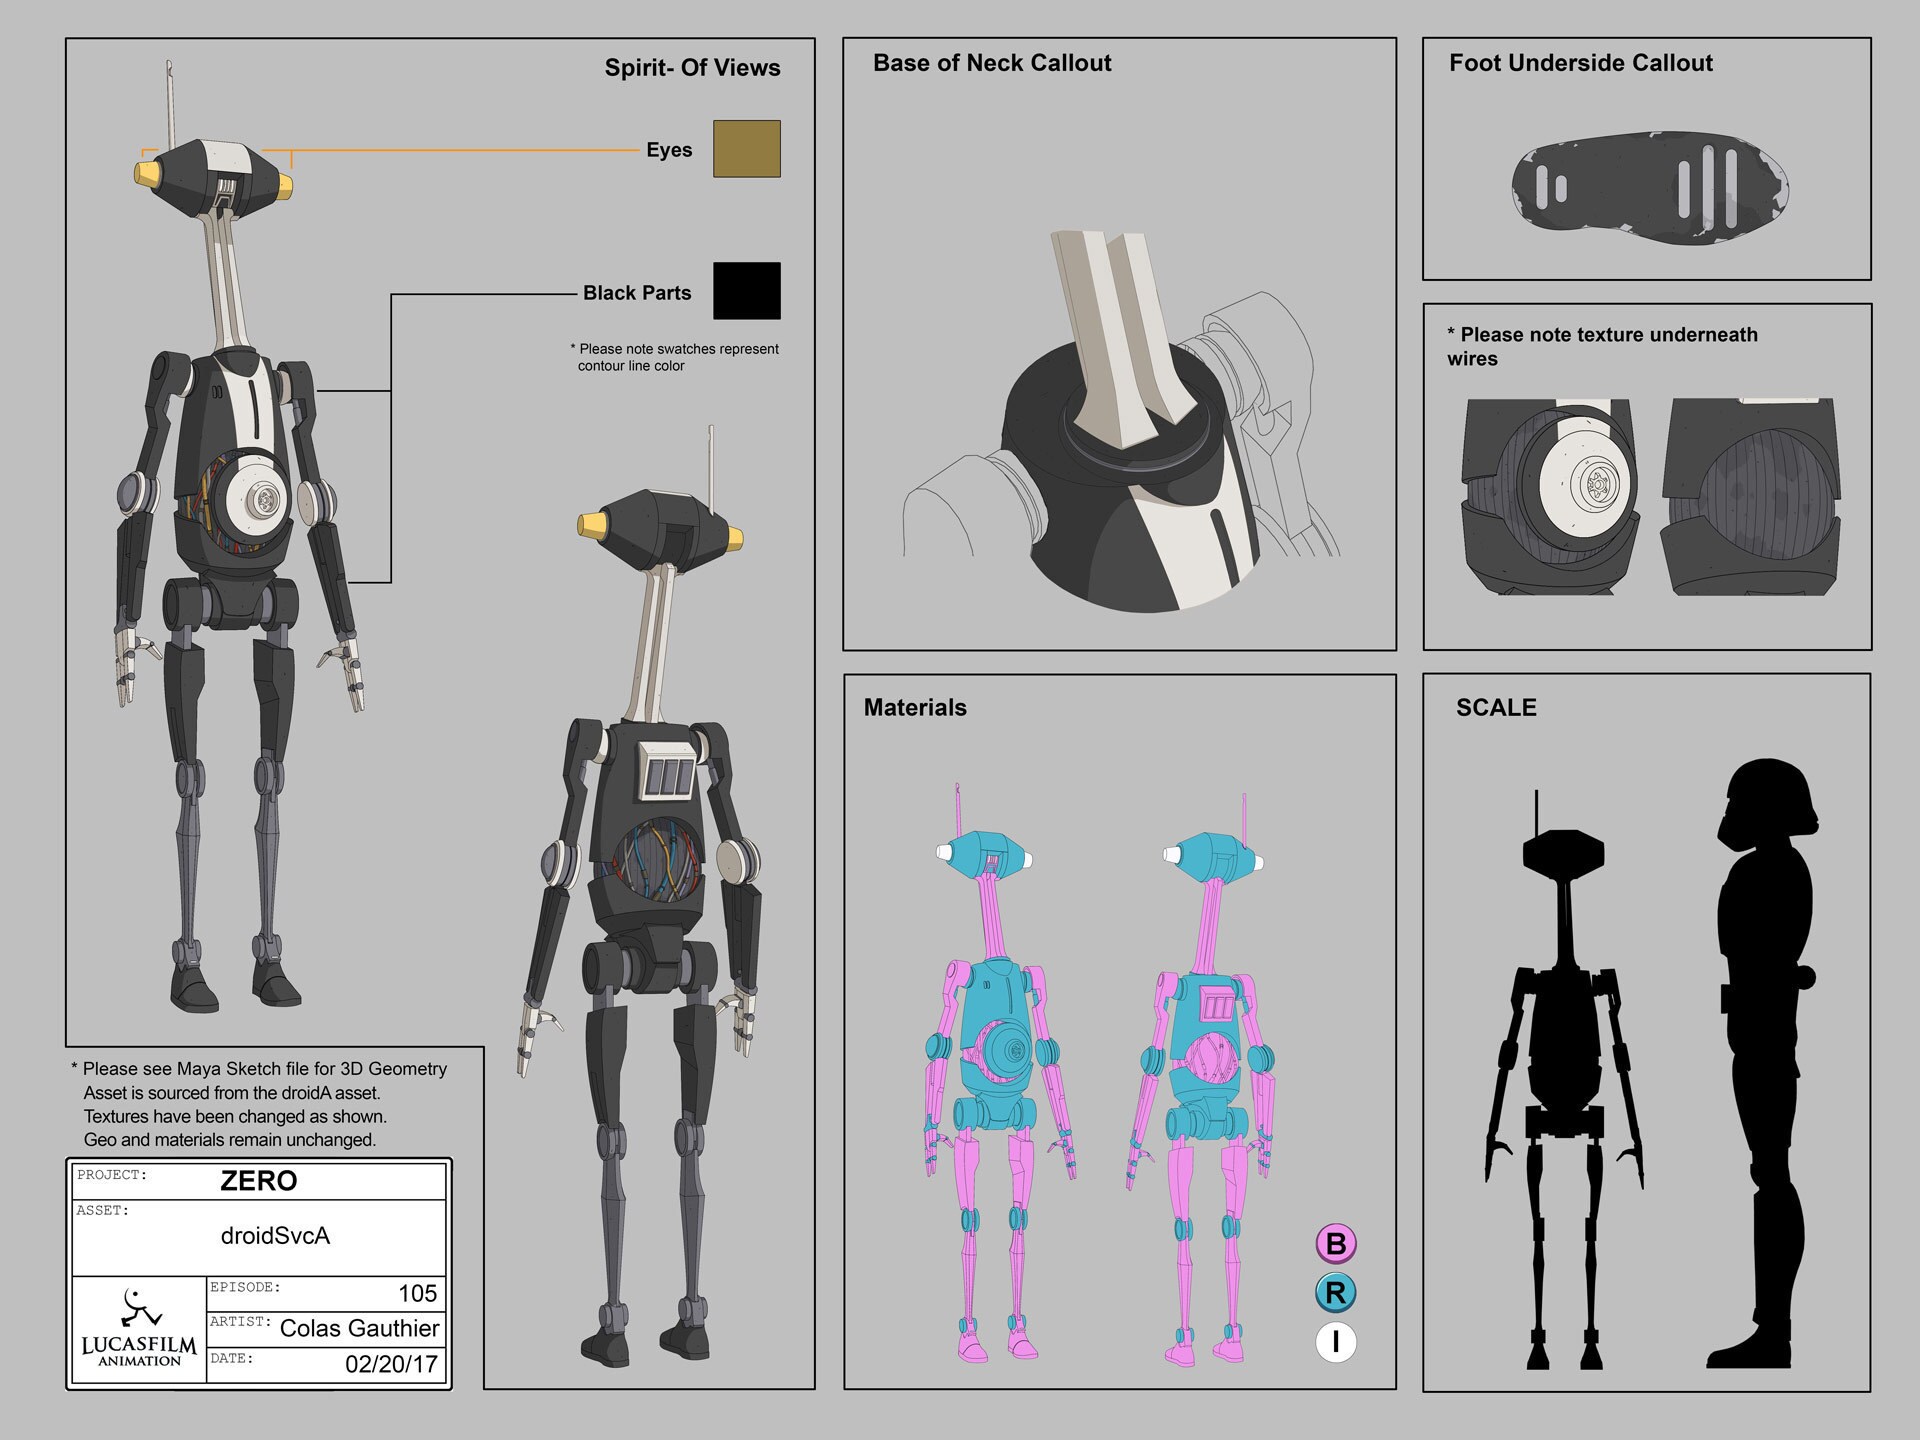 Service droid design by Colas Gauthier.